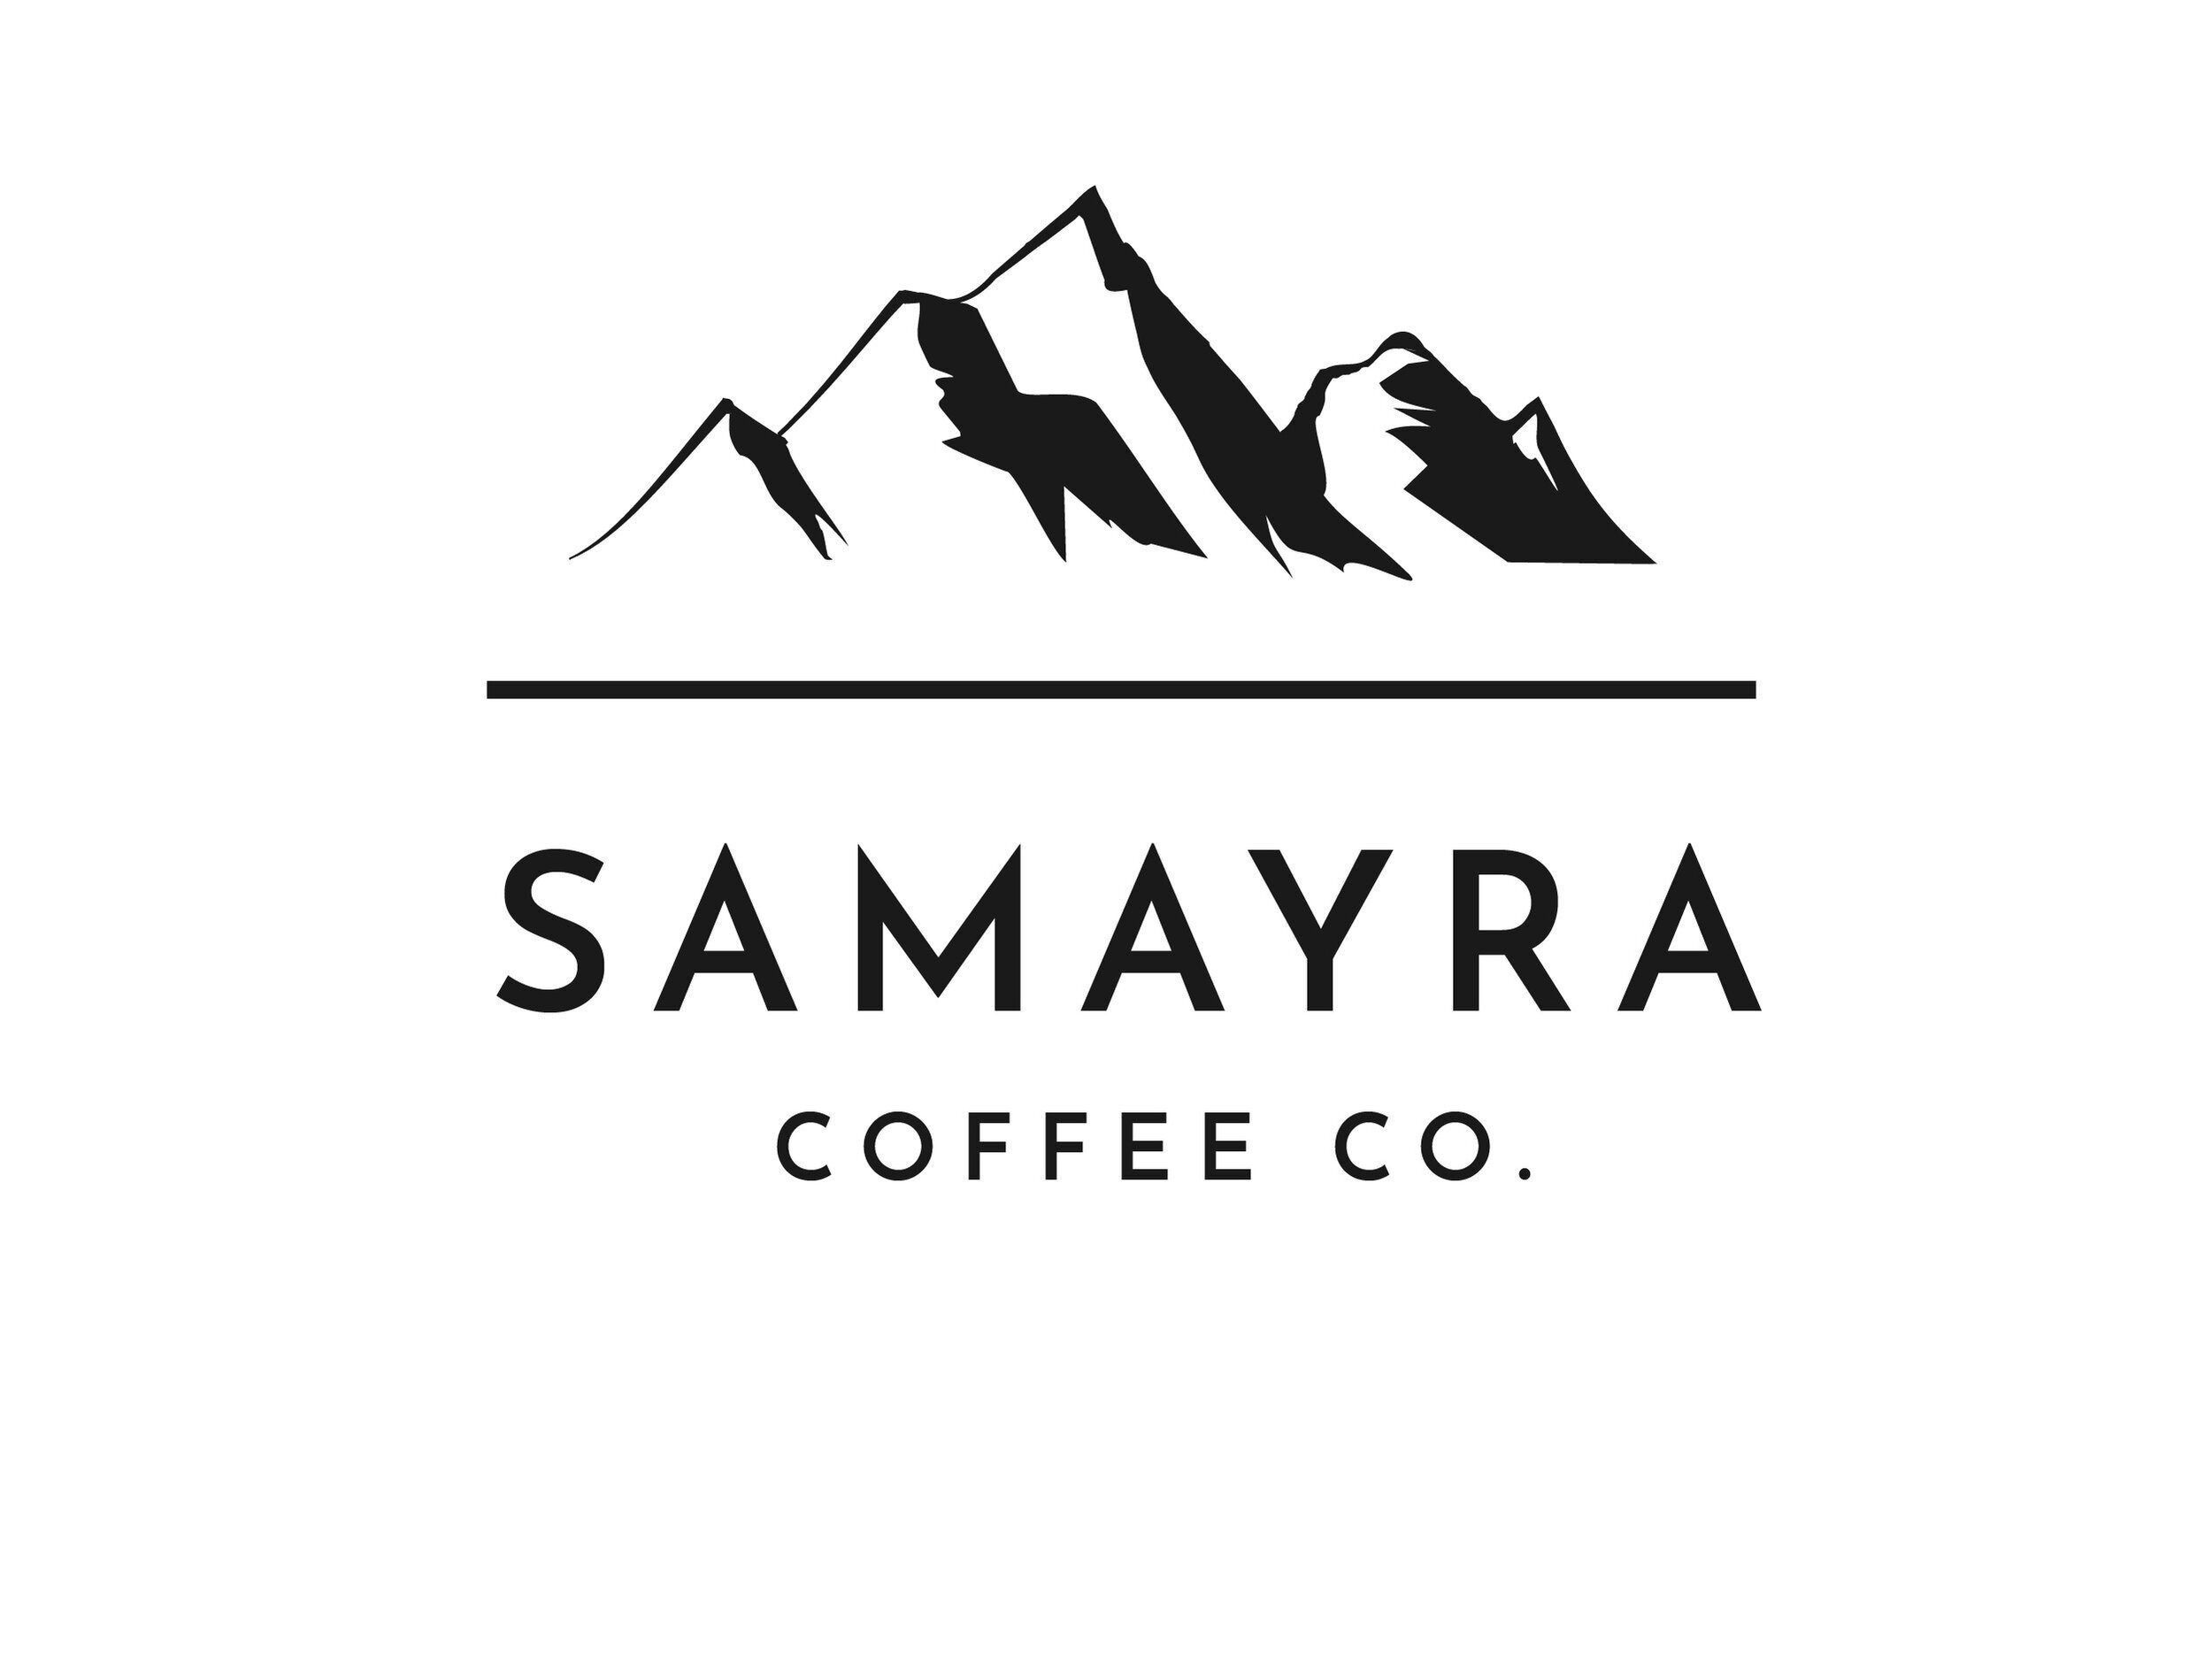 Samayra Coffee Co.